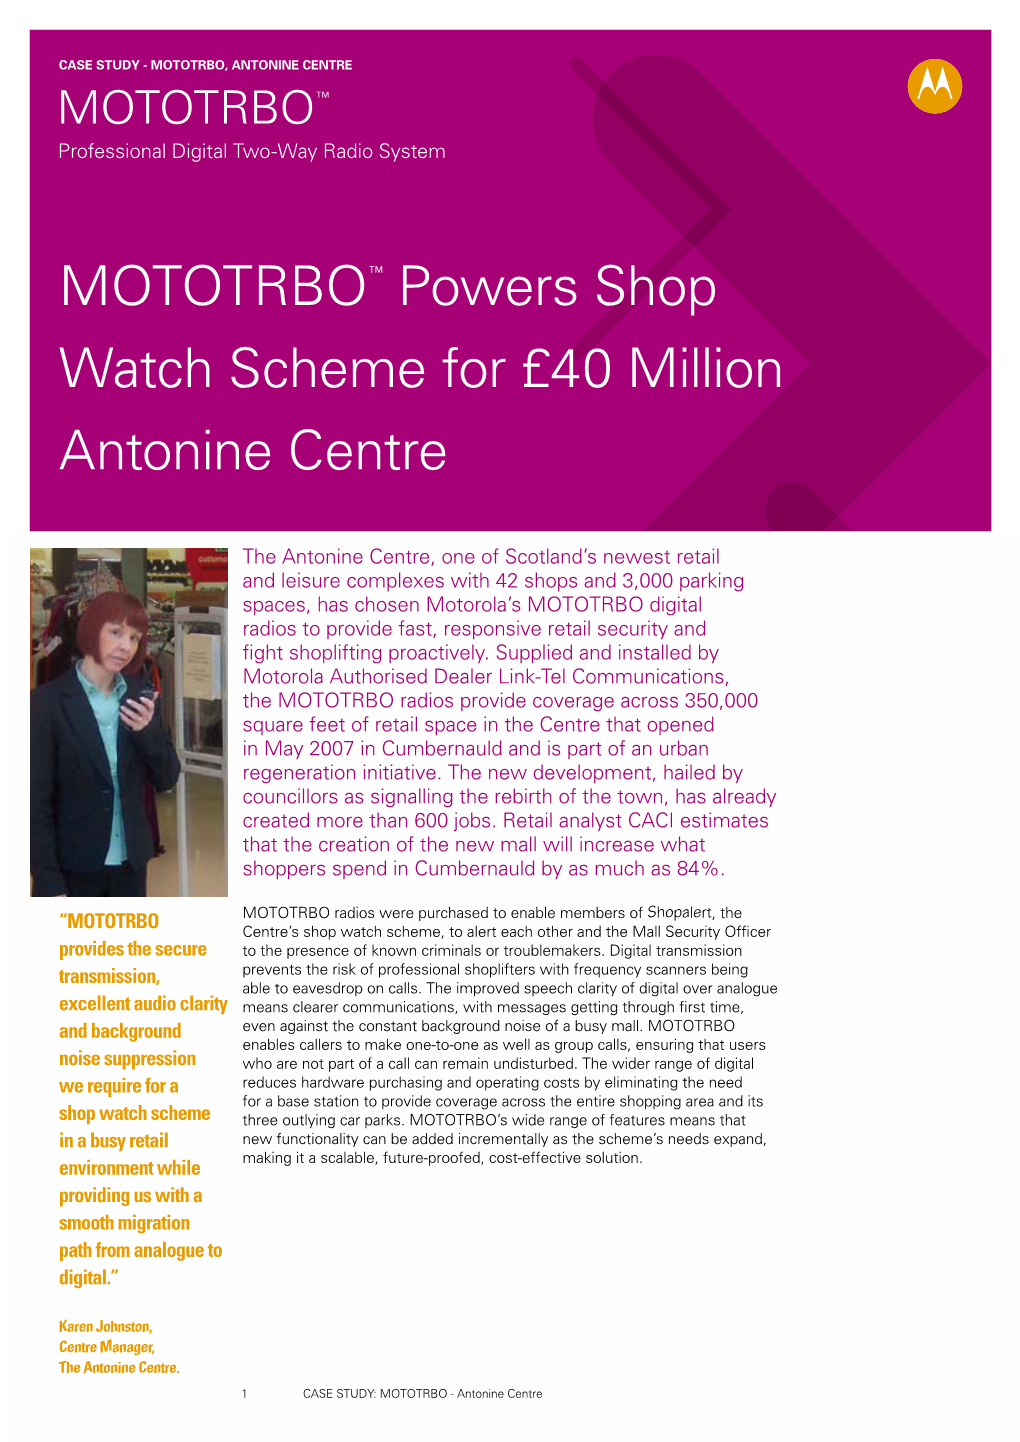 MOTOTRBO™ Powers Shop Watch Scheme for £40 Million Antonine